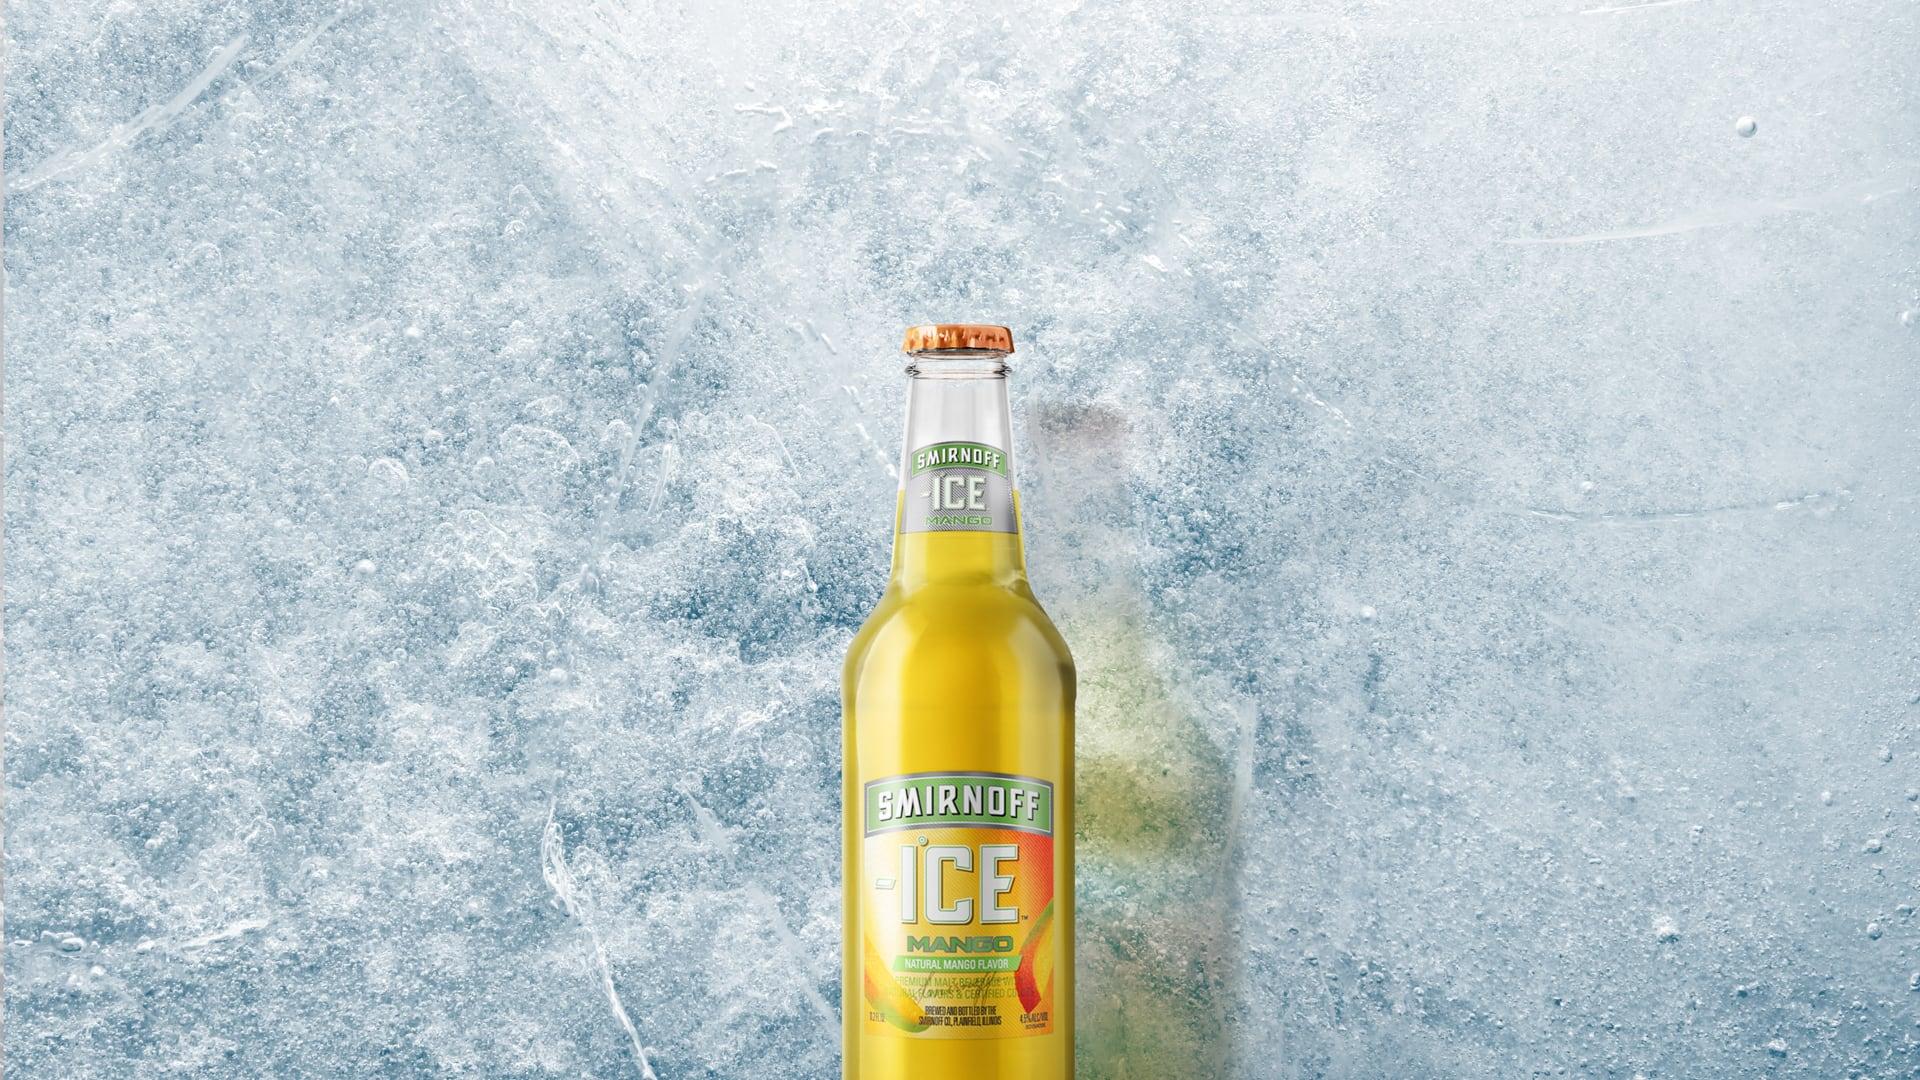 Smirnoff Ice Mango on a Icy background